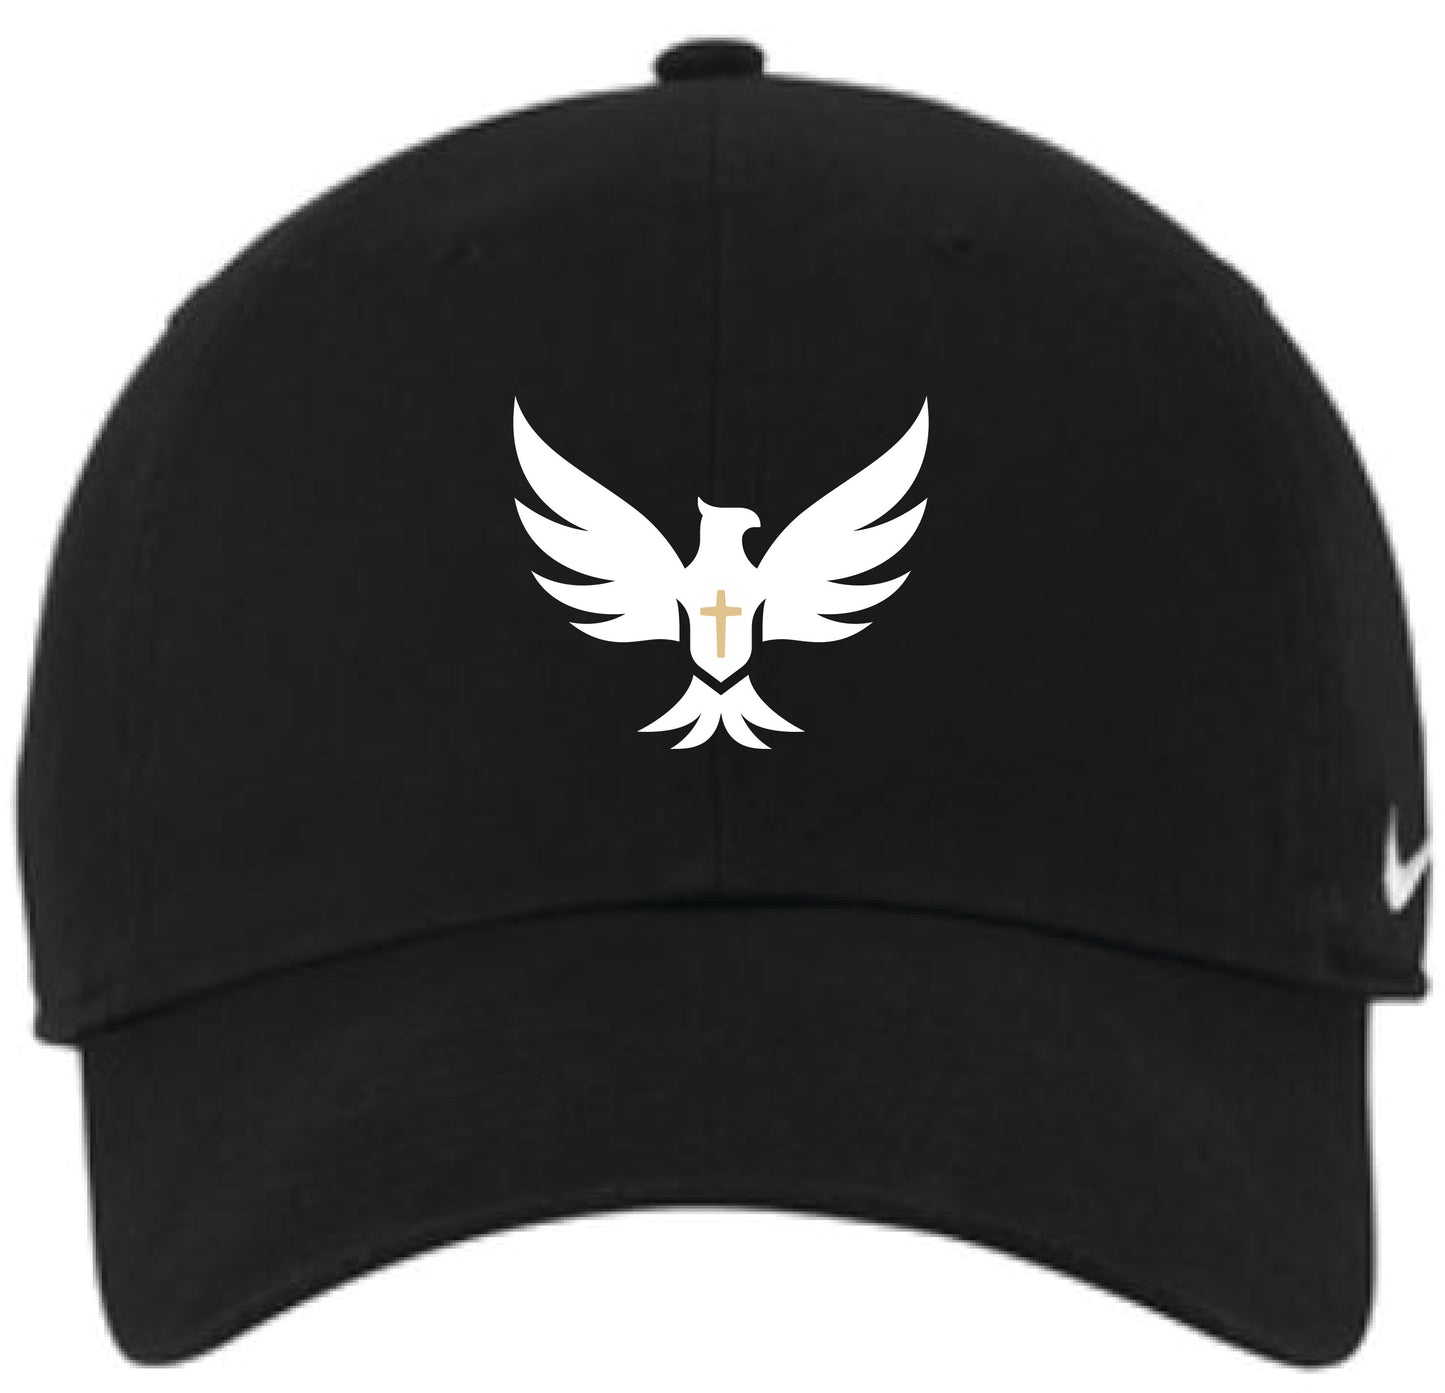 Spirit Wear Nike Baseball Caps in 2 colors